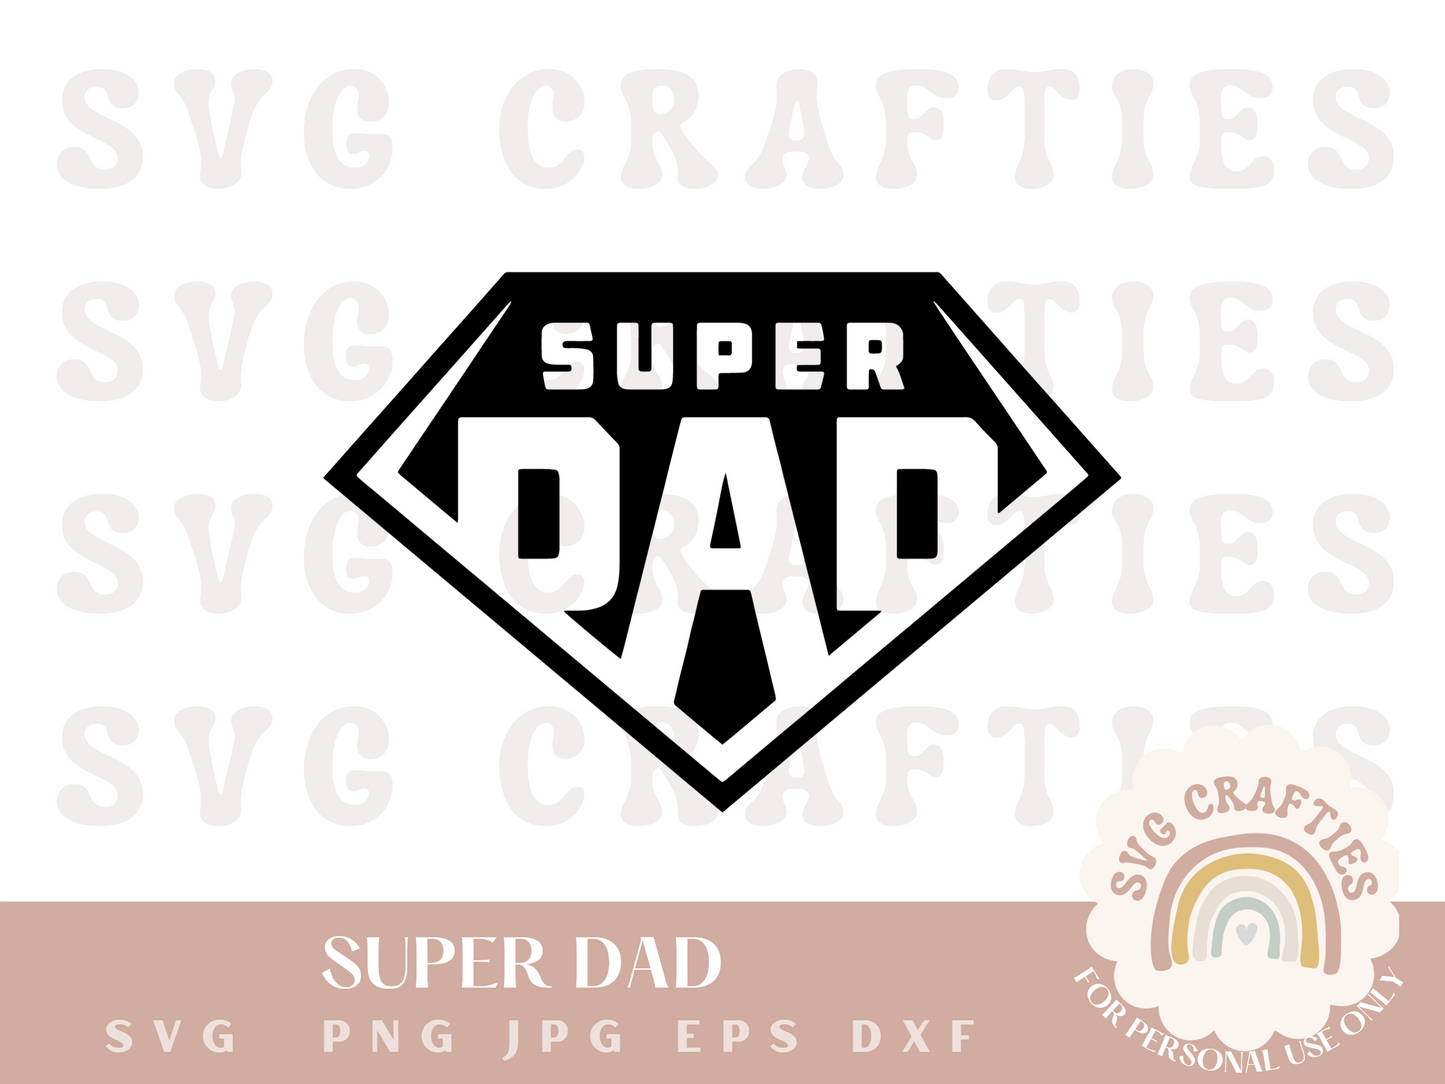 Super Dad Free SVG Download